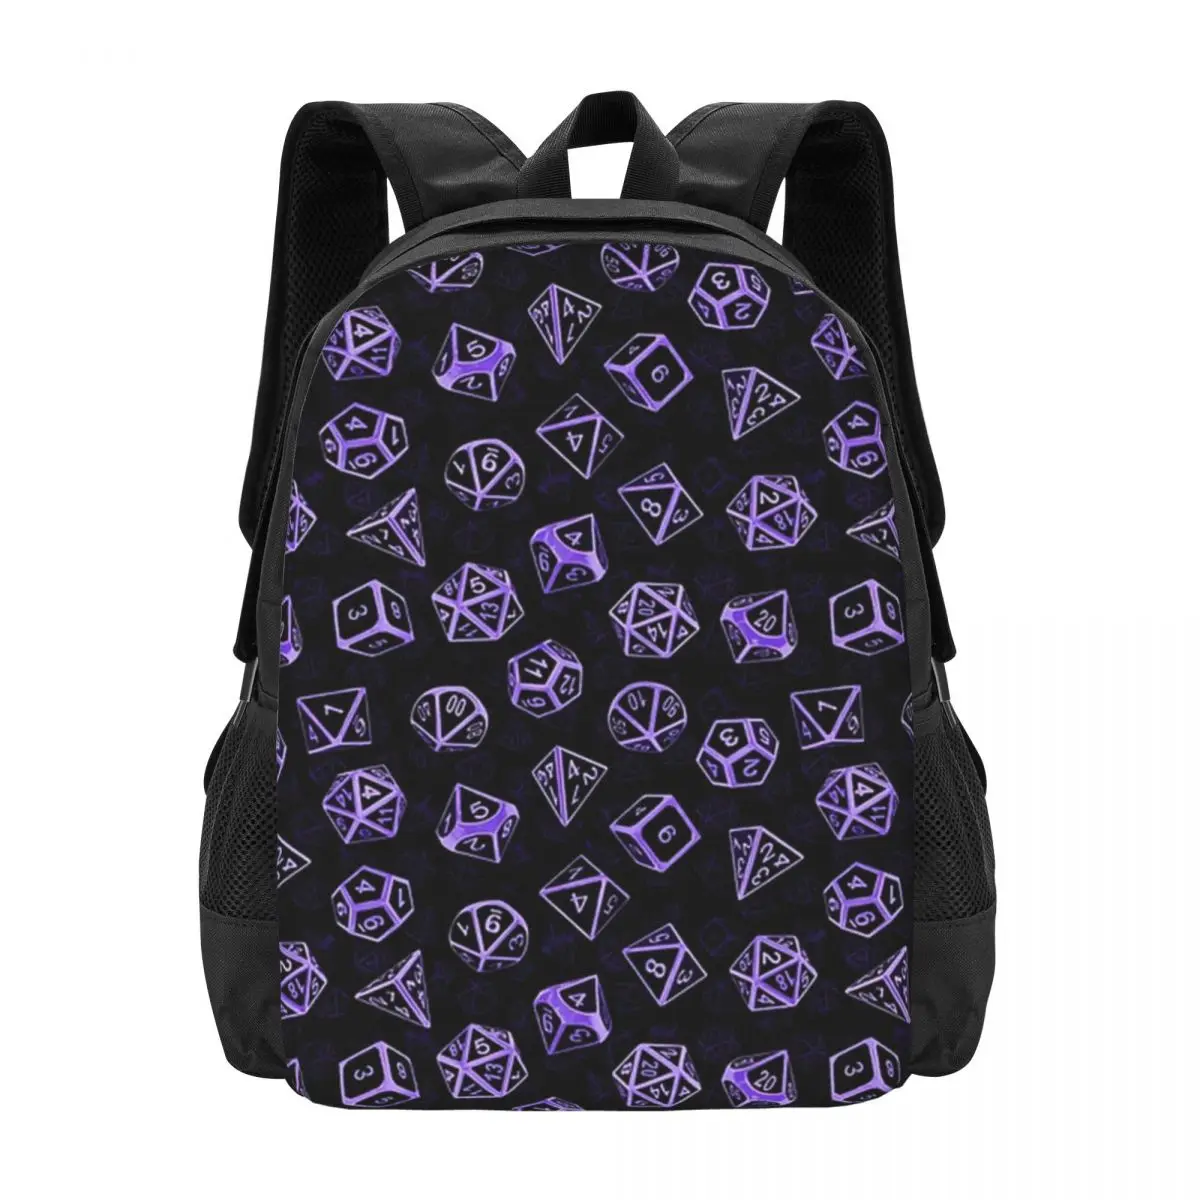 D20 Dice Set Pattern (Purple) Backpack for Girls Boys Travel RucksackBackpacks for Teenage school bag